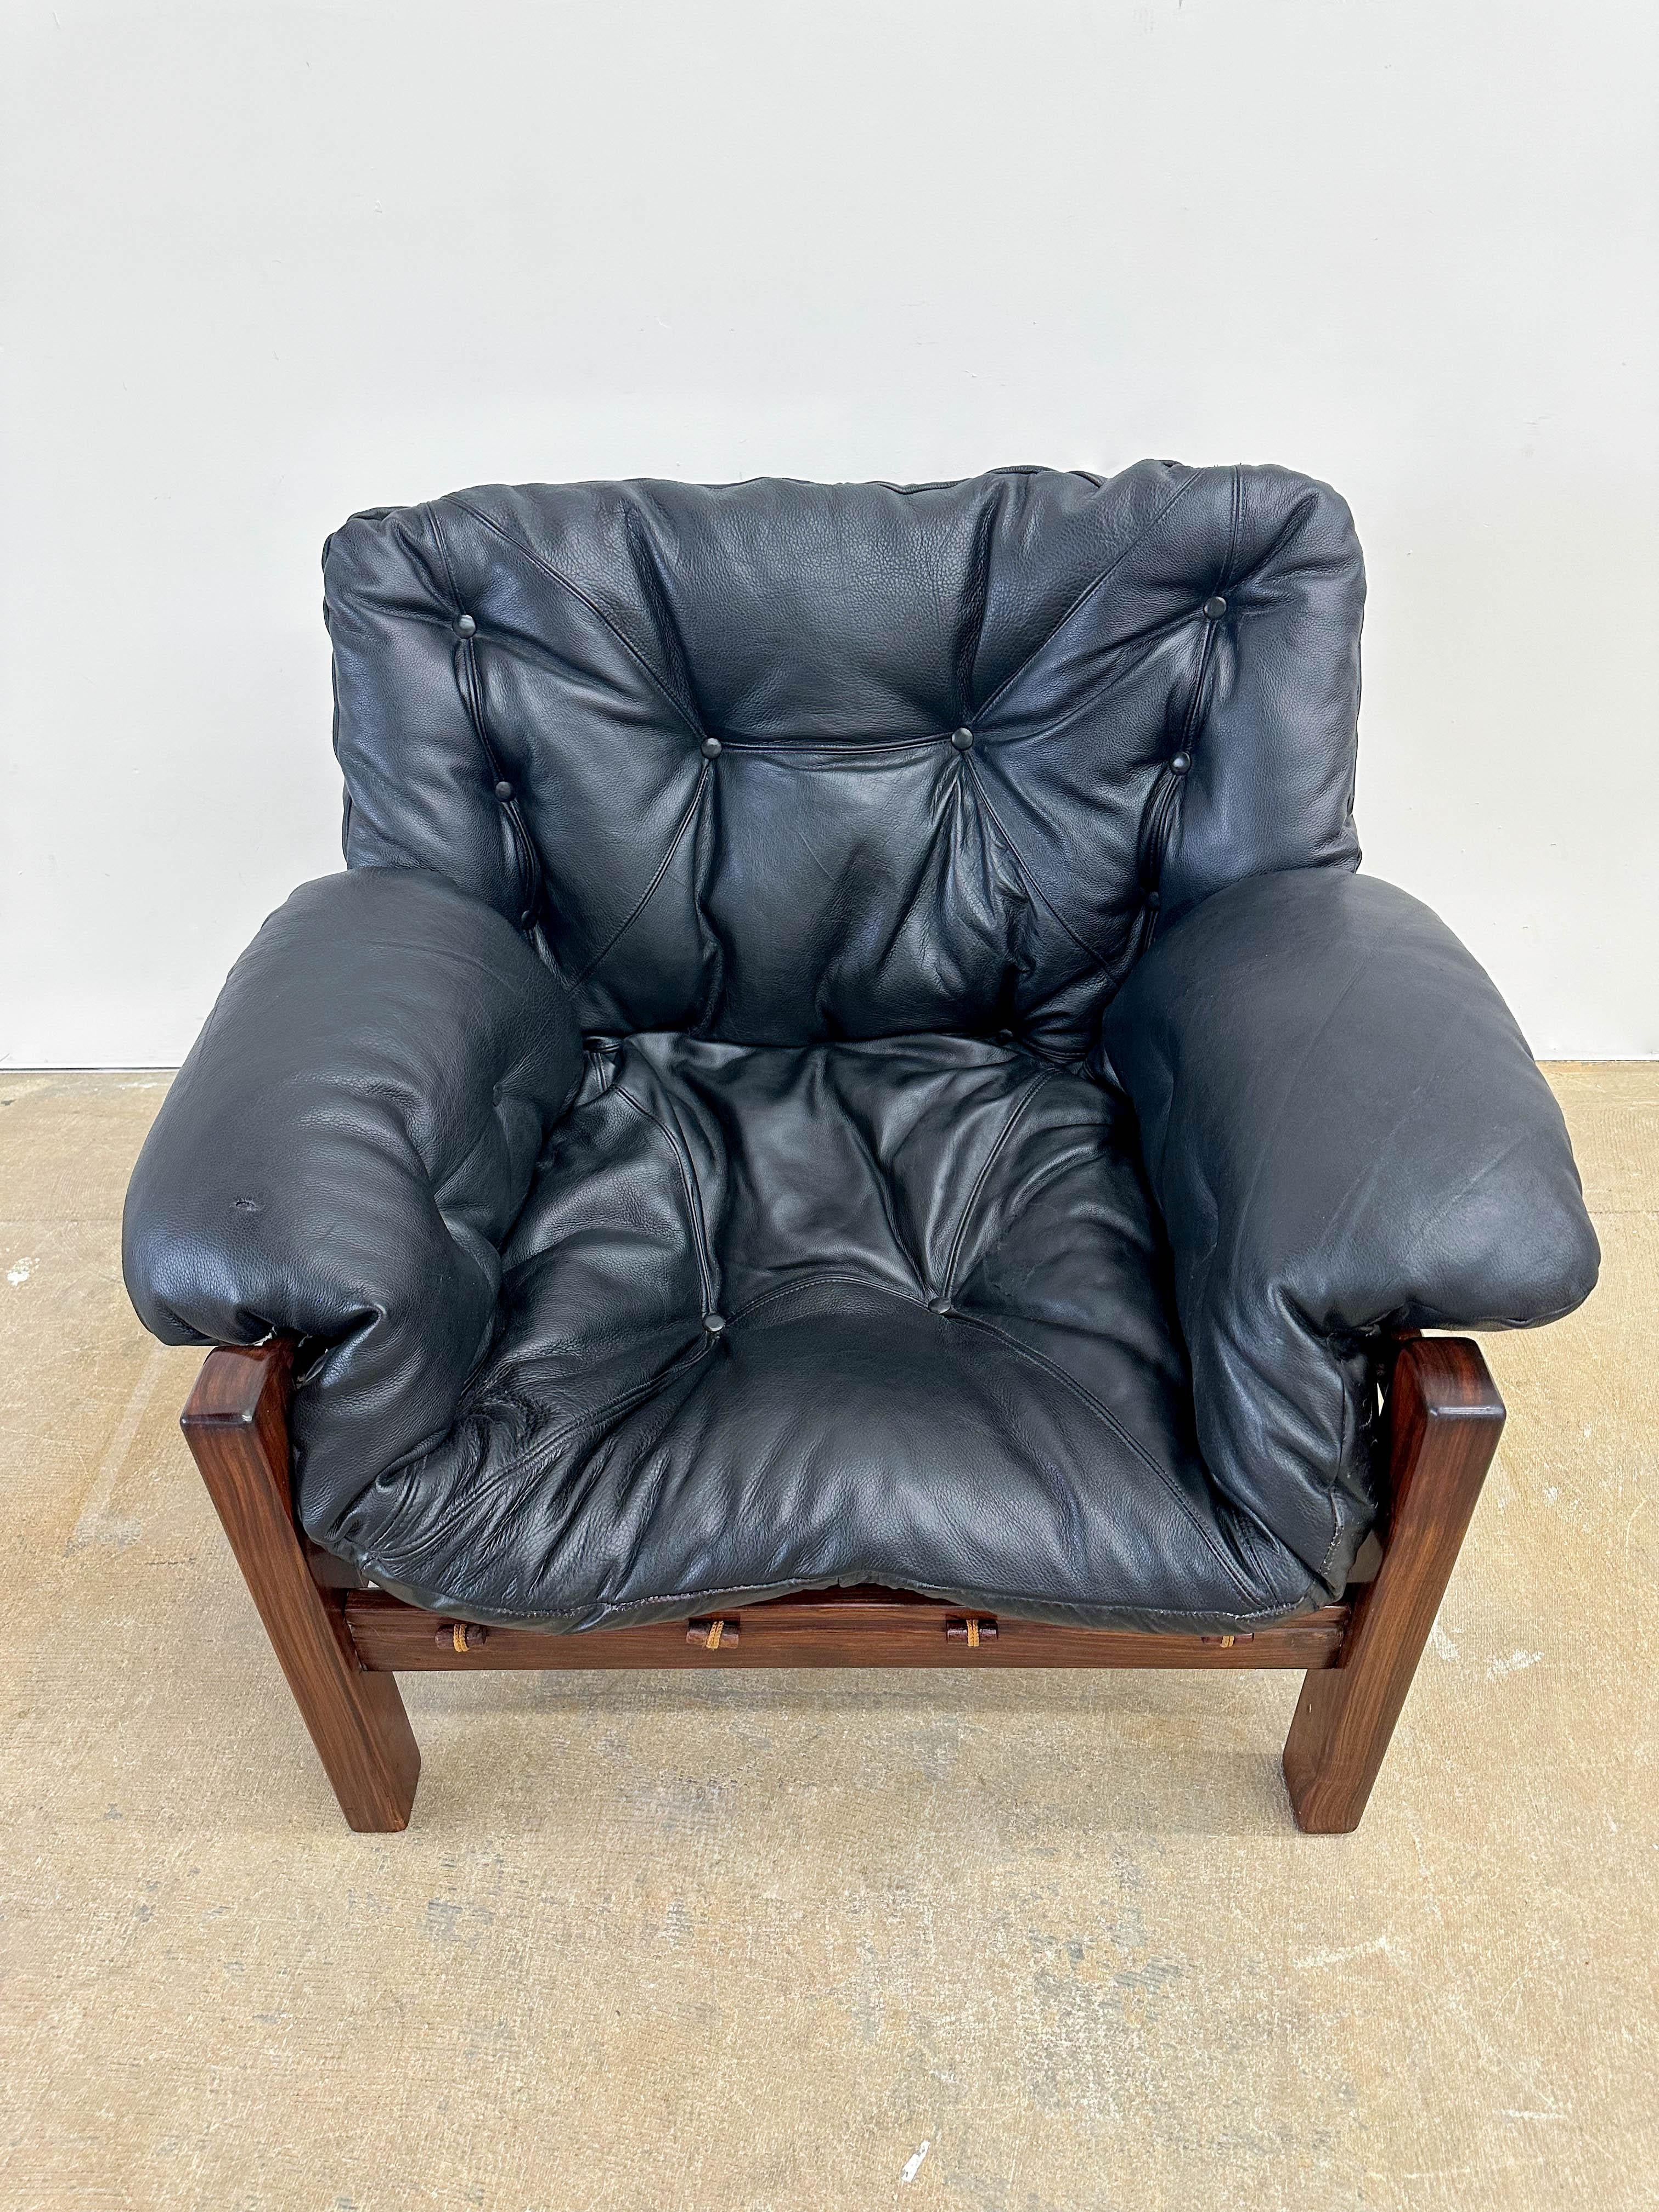 Jean Gillion Brazilian Rosewood and Leather Tijuca Lounge Chair 6